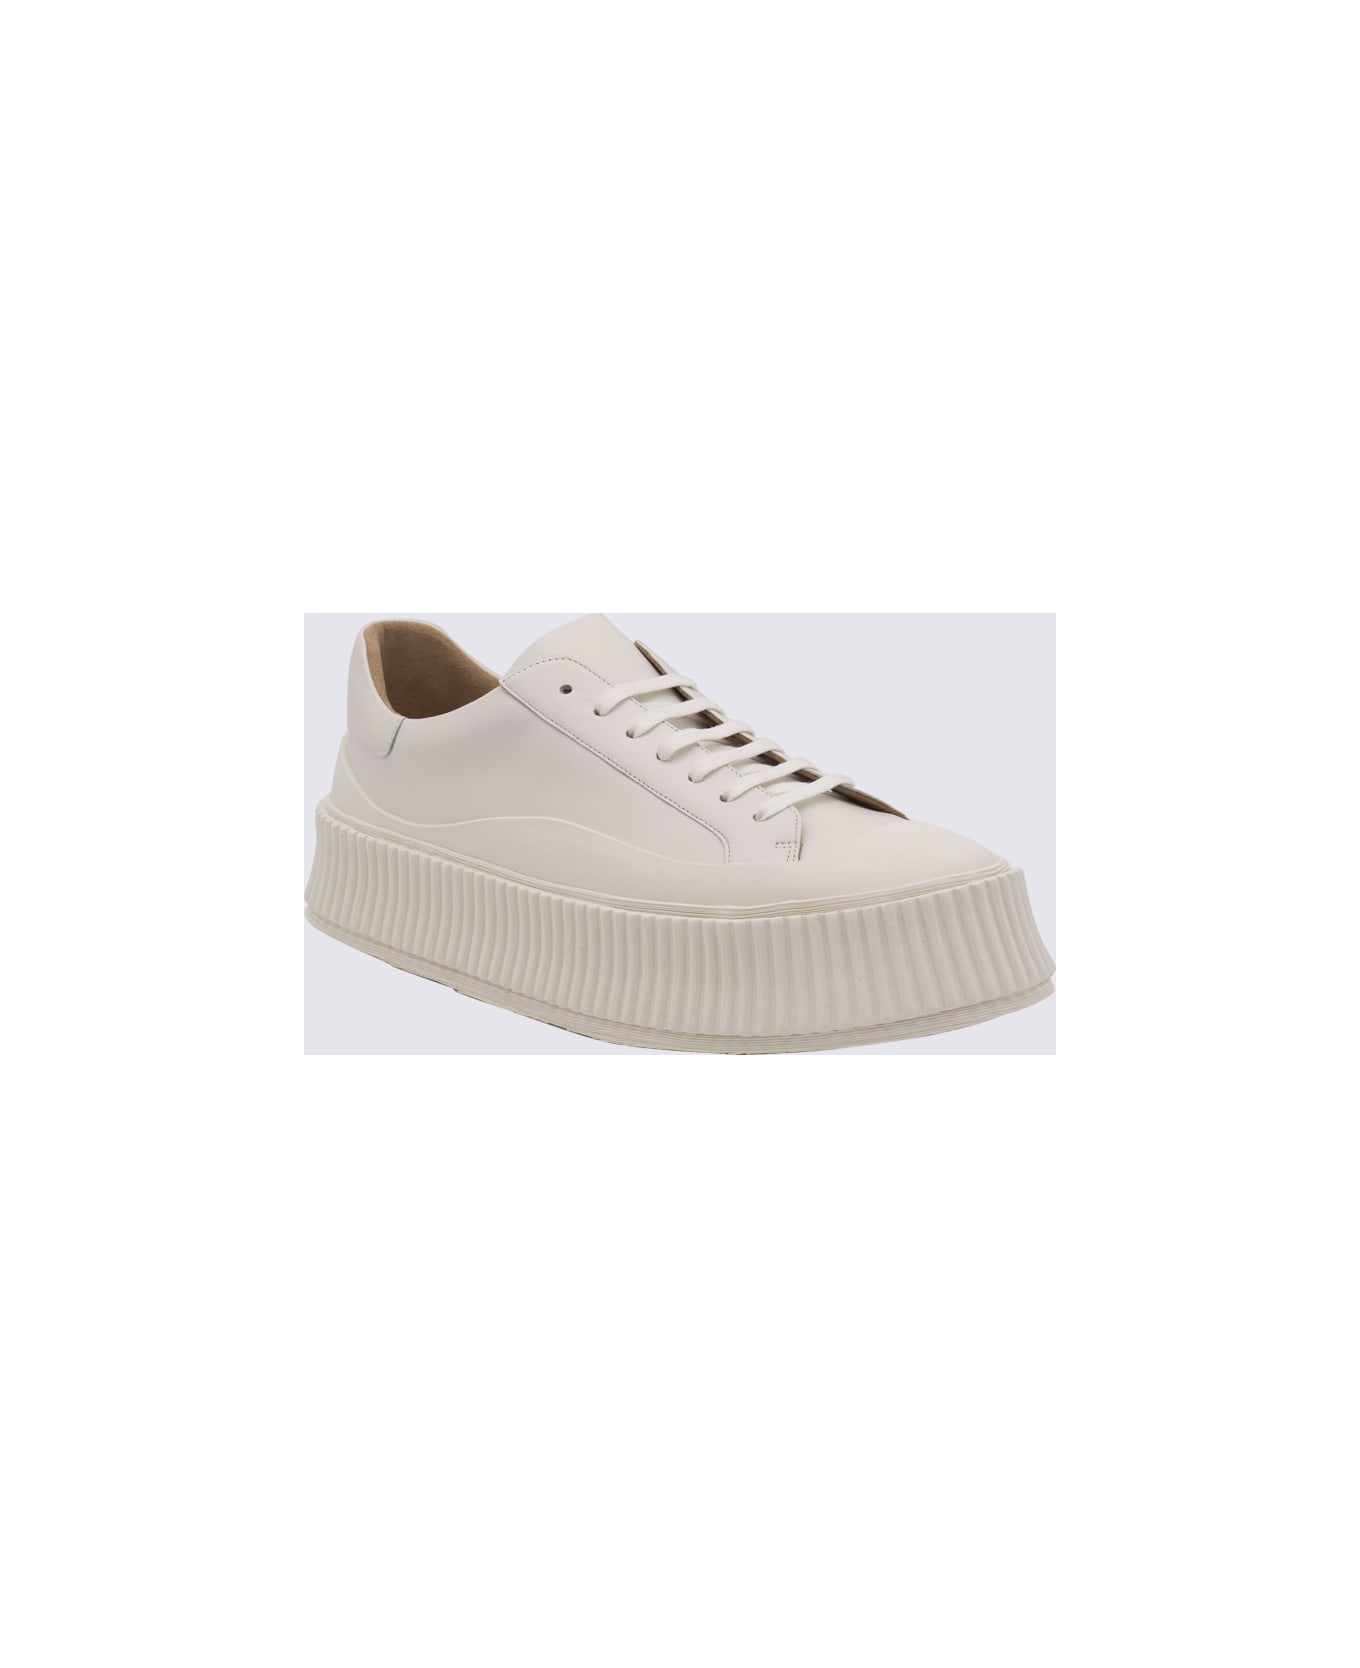 Jil Sander White Leather Sneakers - Beige